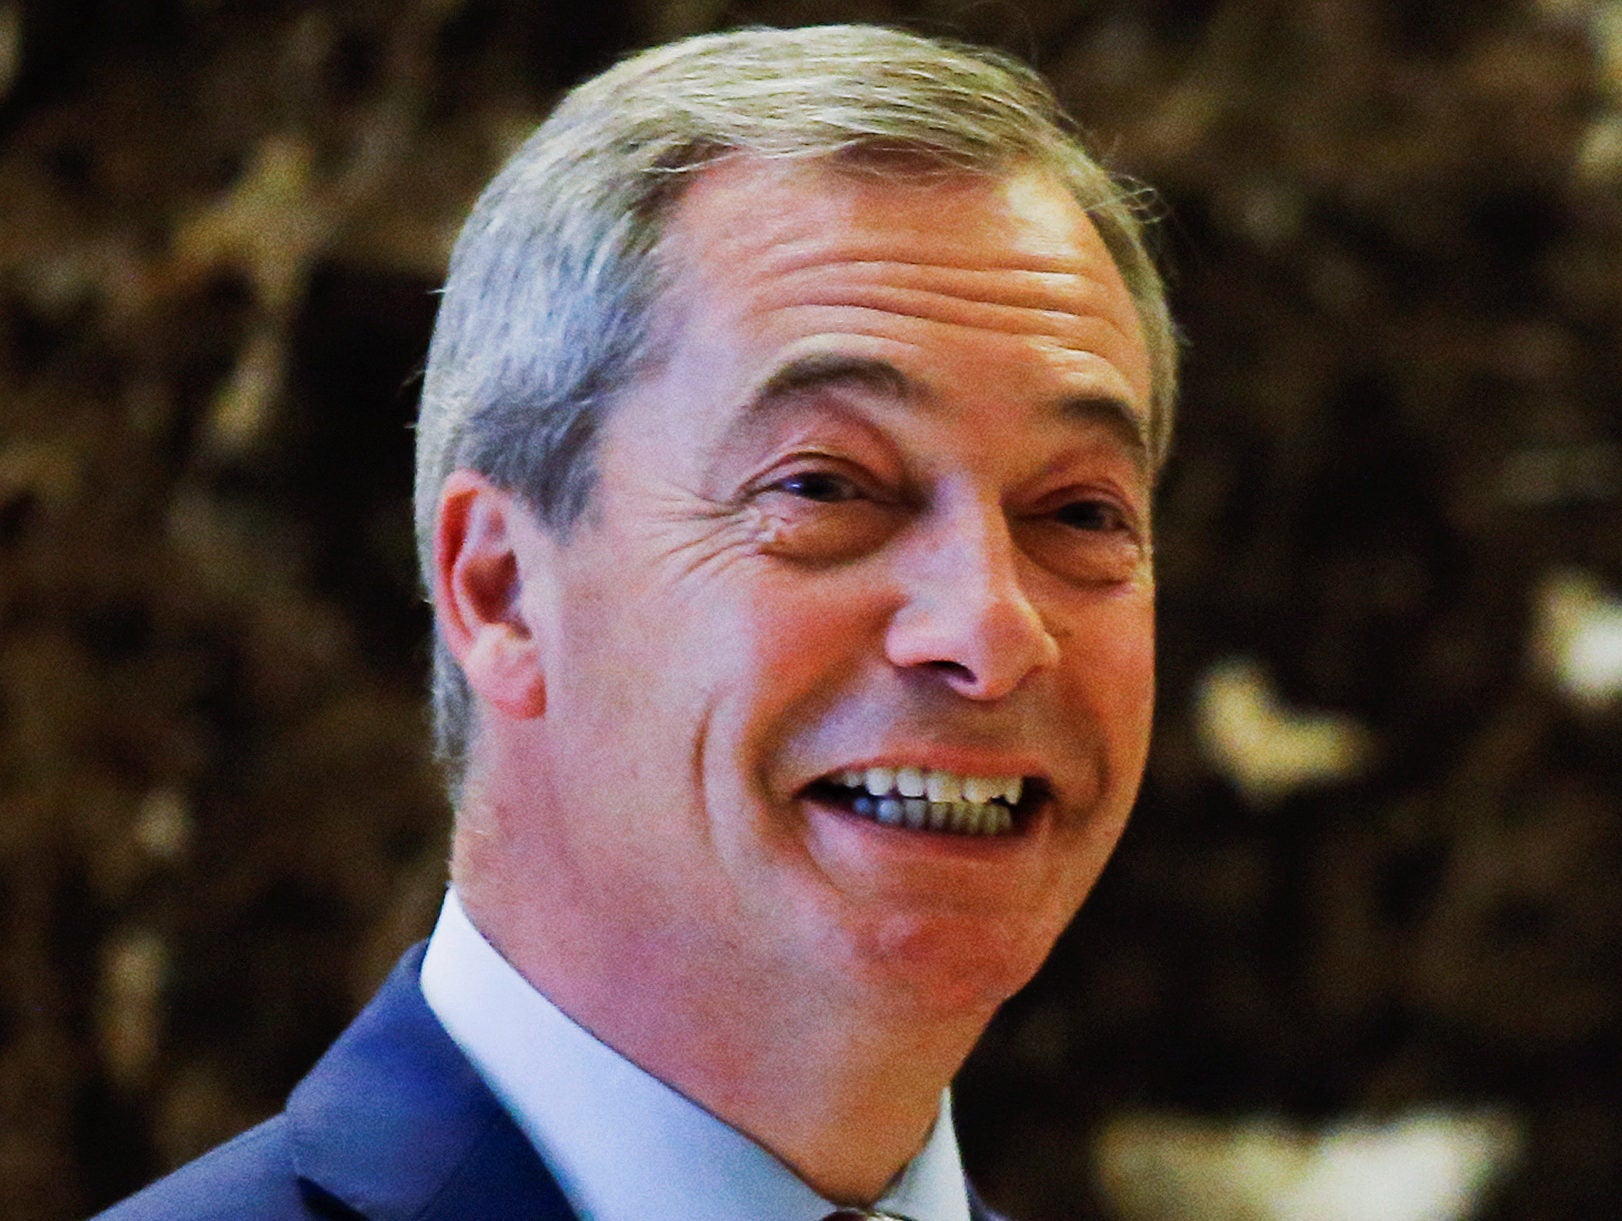 Former UKIP leader Nigel Farage to host own show on LBC radio